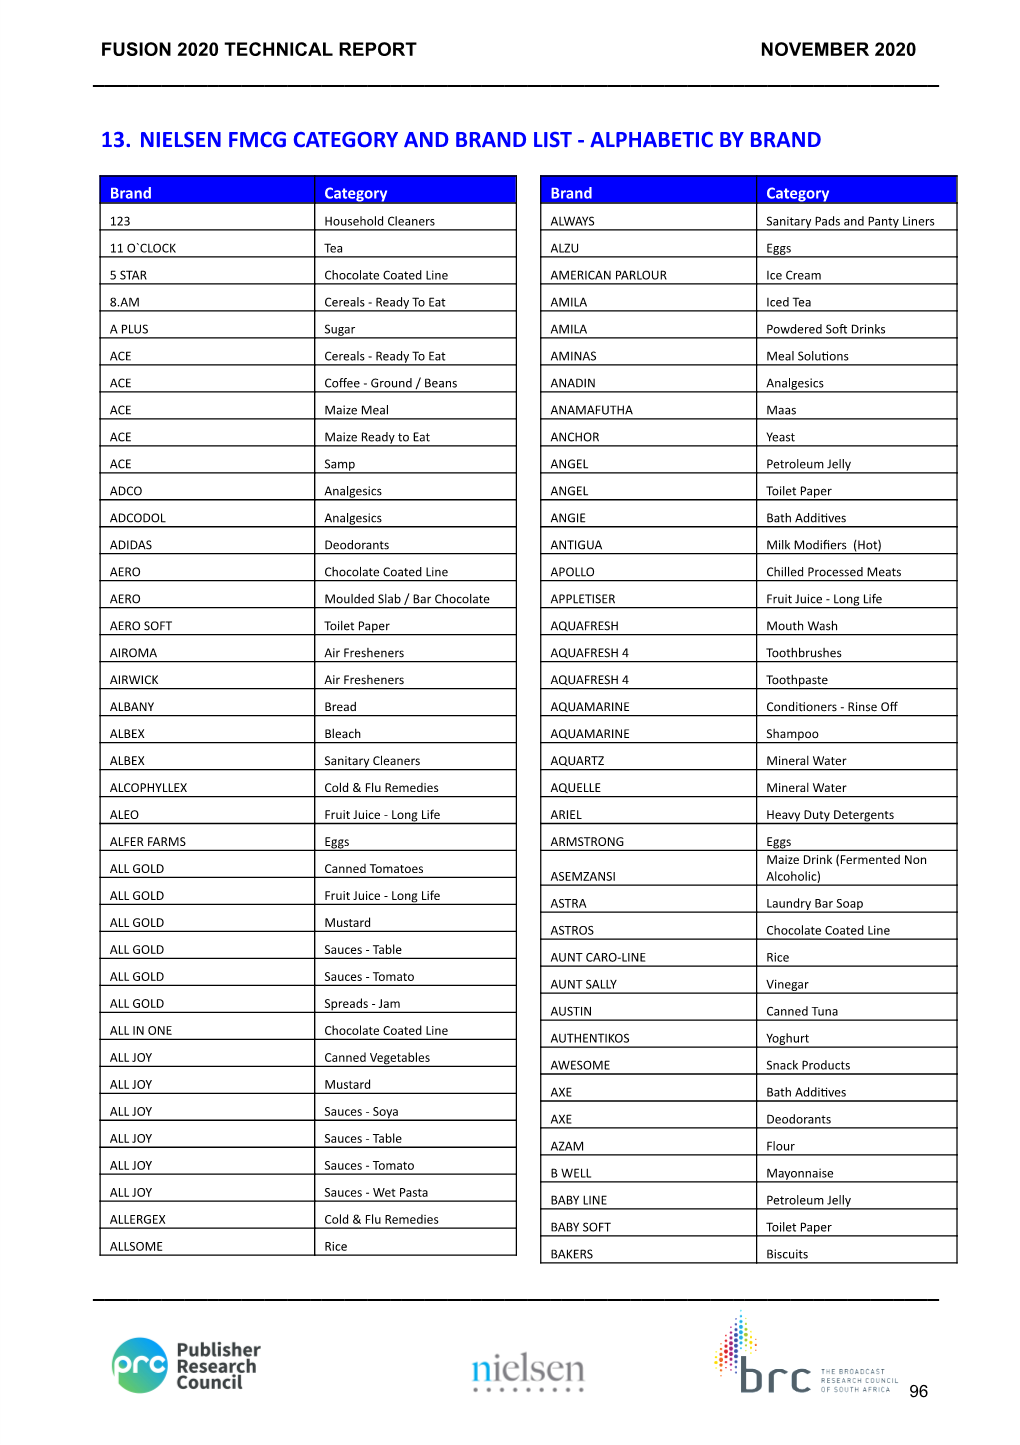 Nielsen FMCG 2019 Brand by Category List